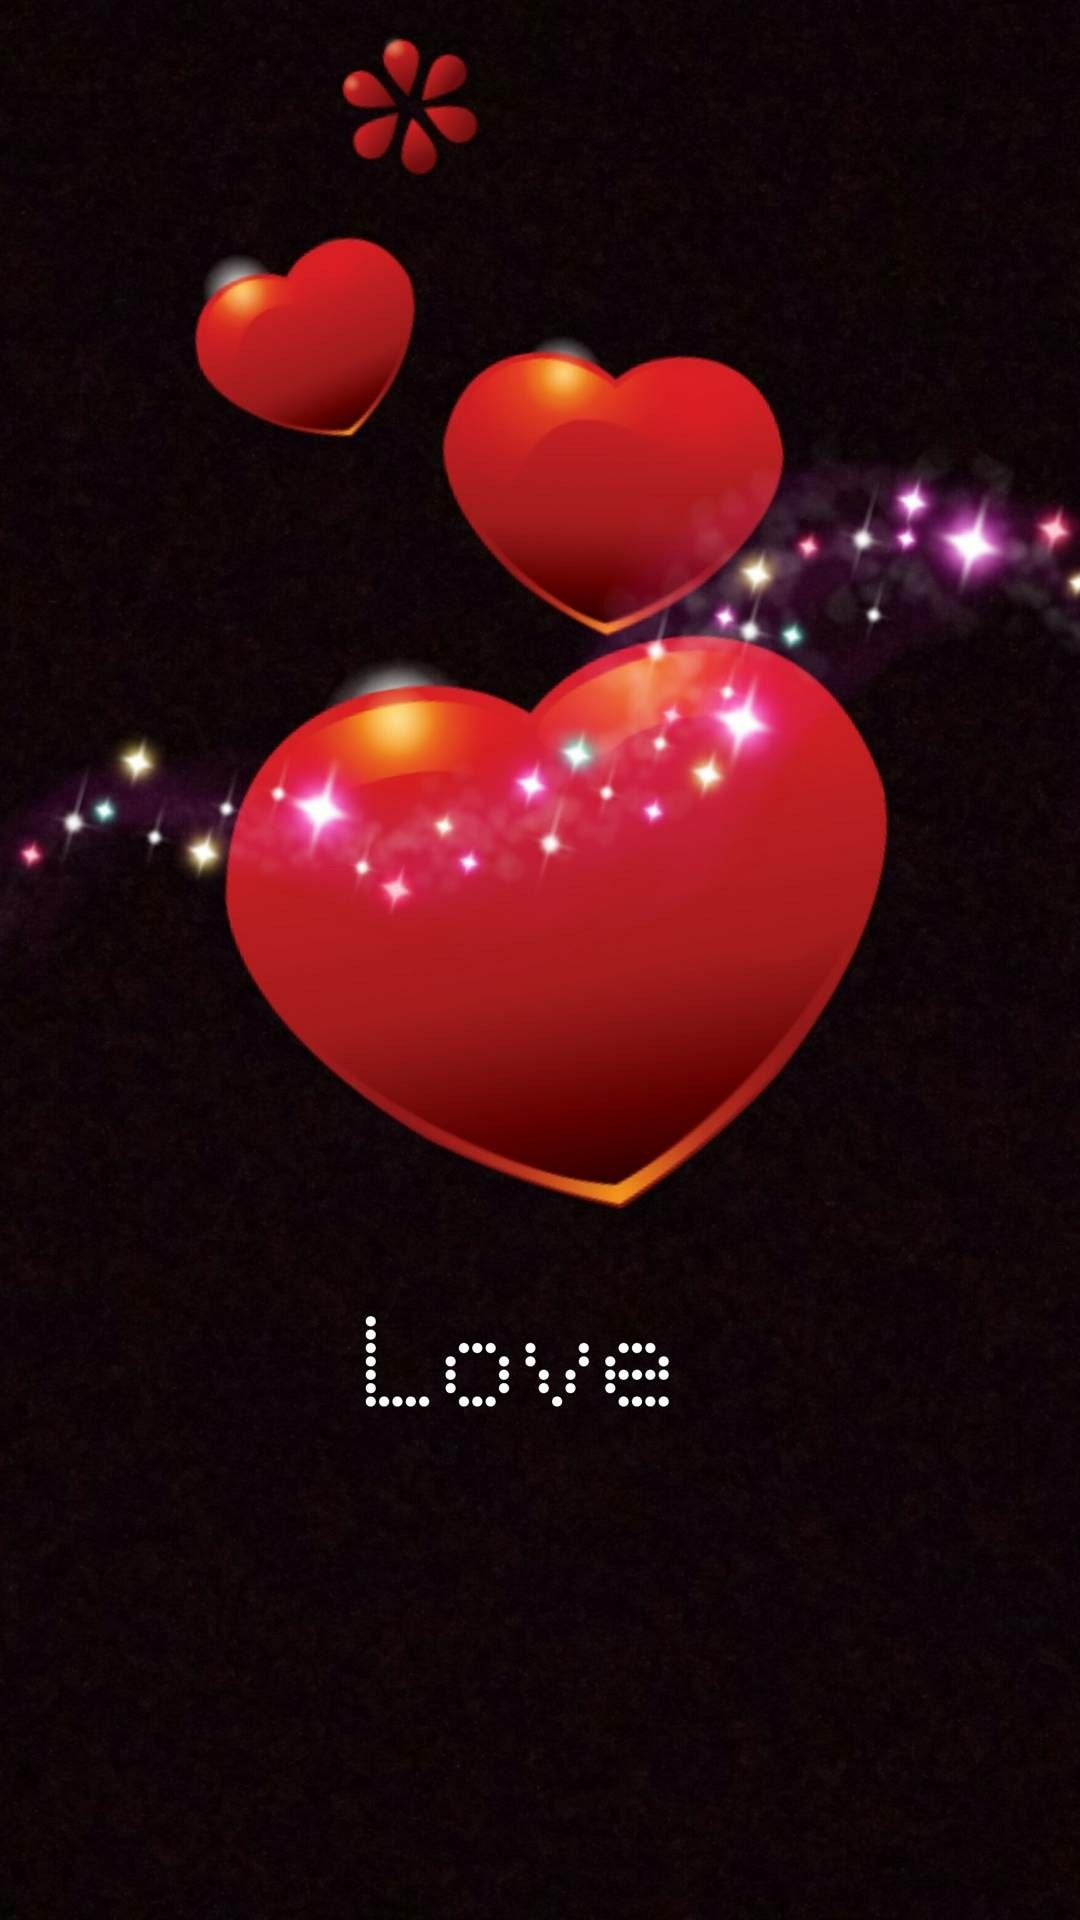 1080x1920 Heart's in love | Love wallpaper, Valentines wallpaper, Love wallpaper backgrounds